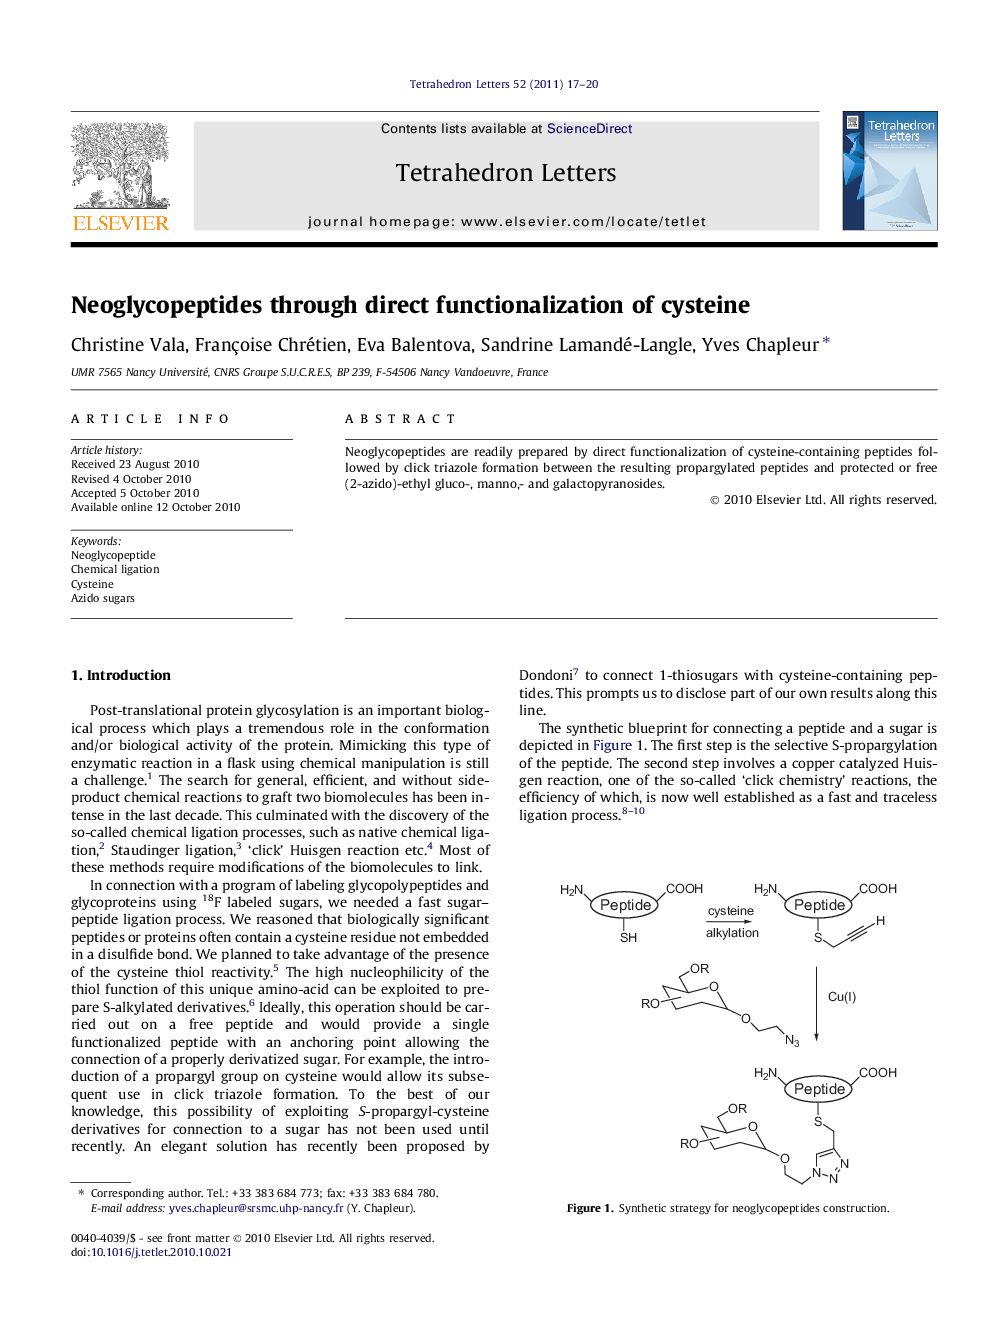 Neoglycopeptides through direct functionalization of cysteine